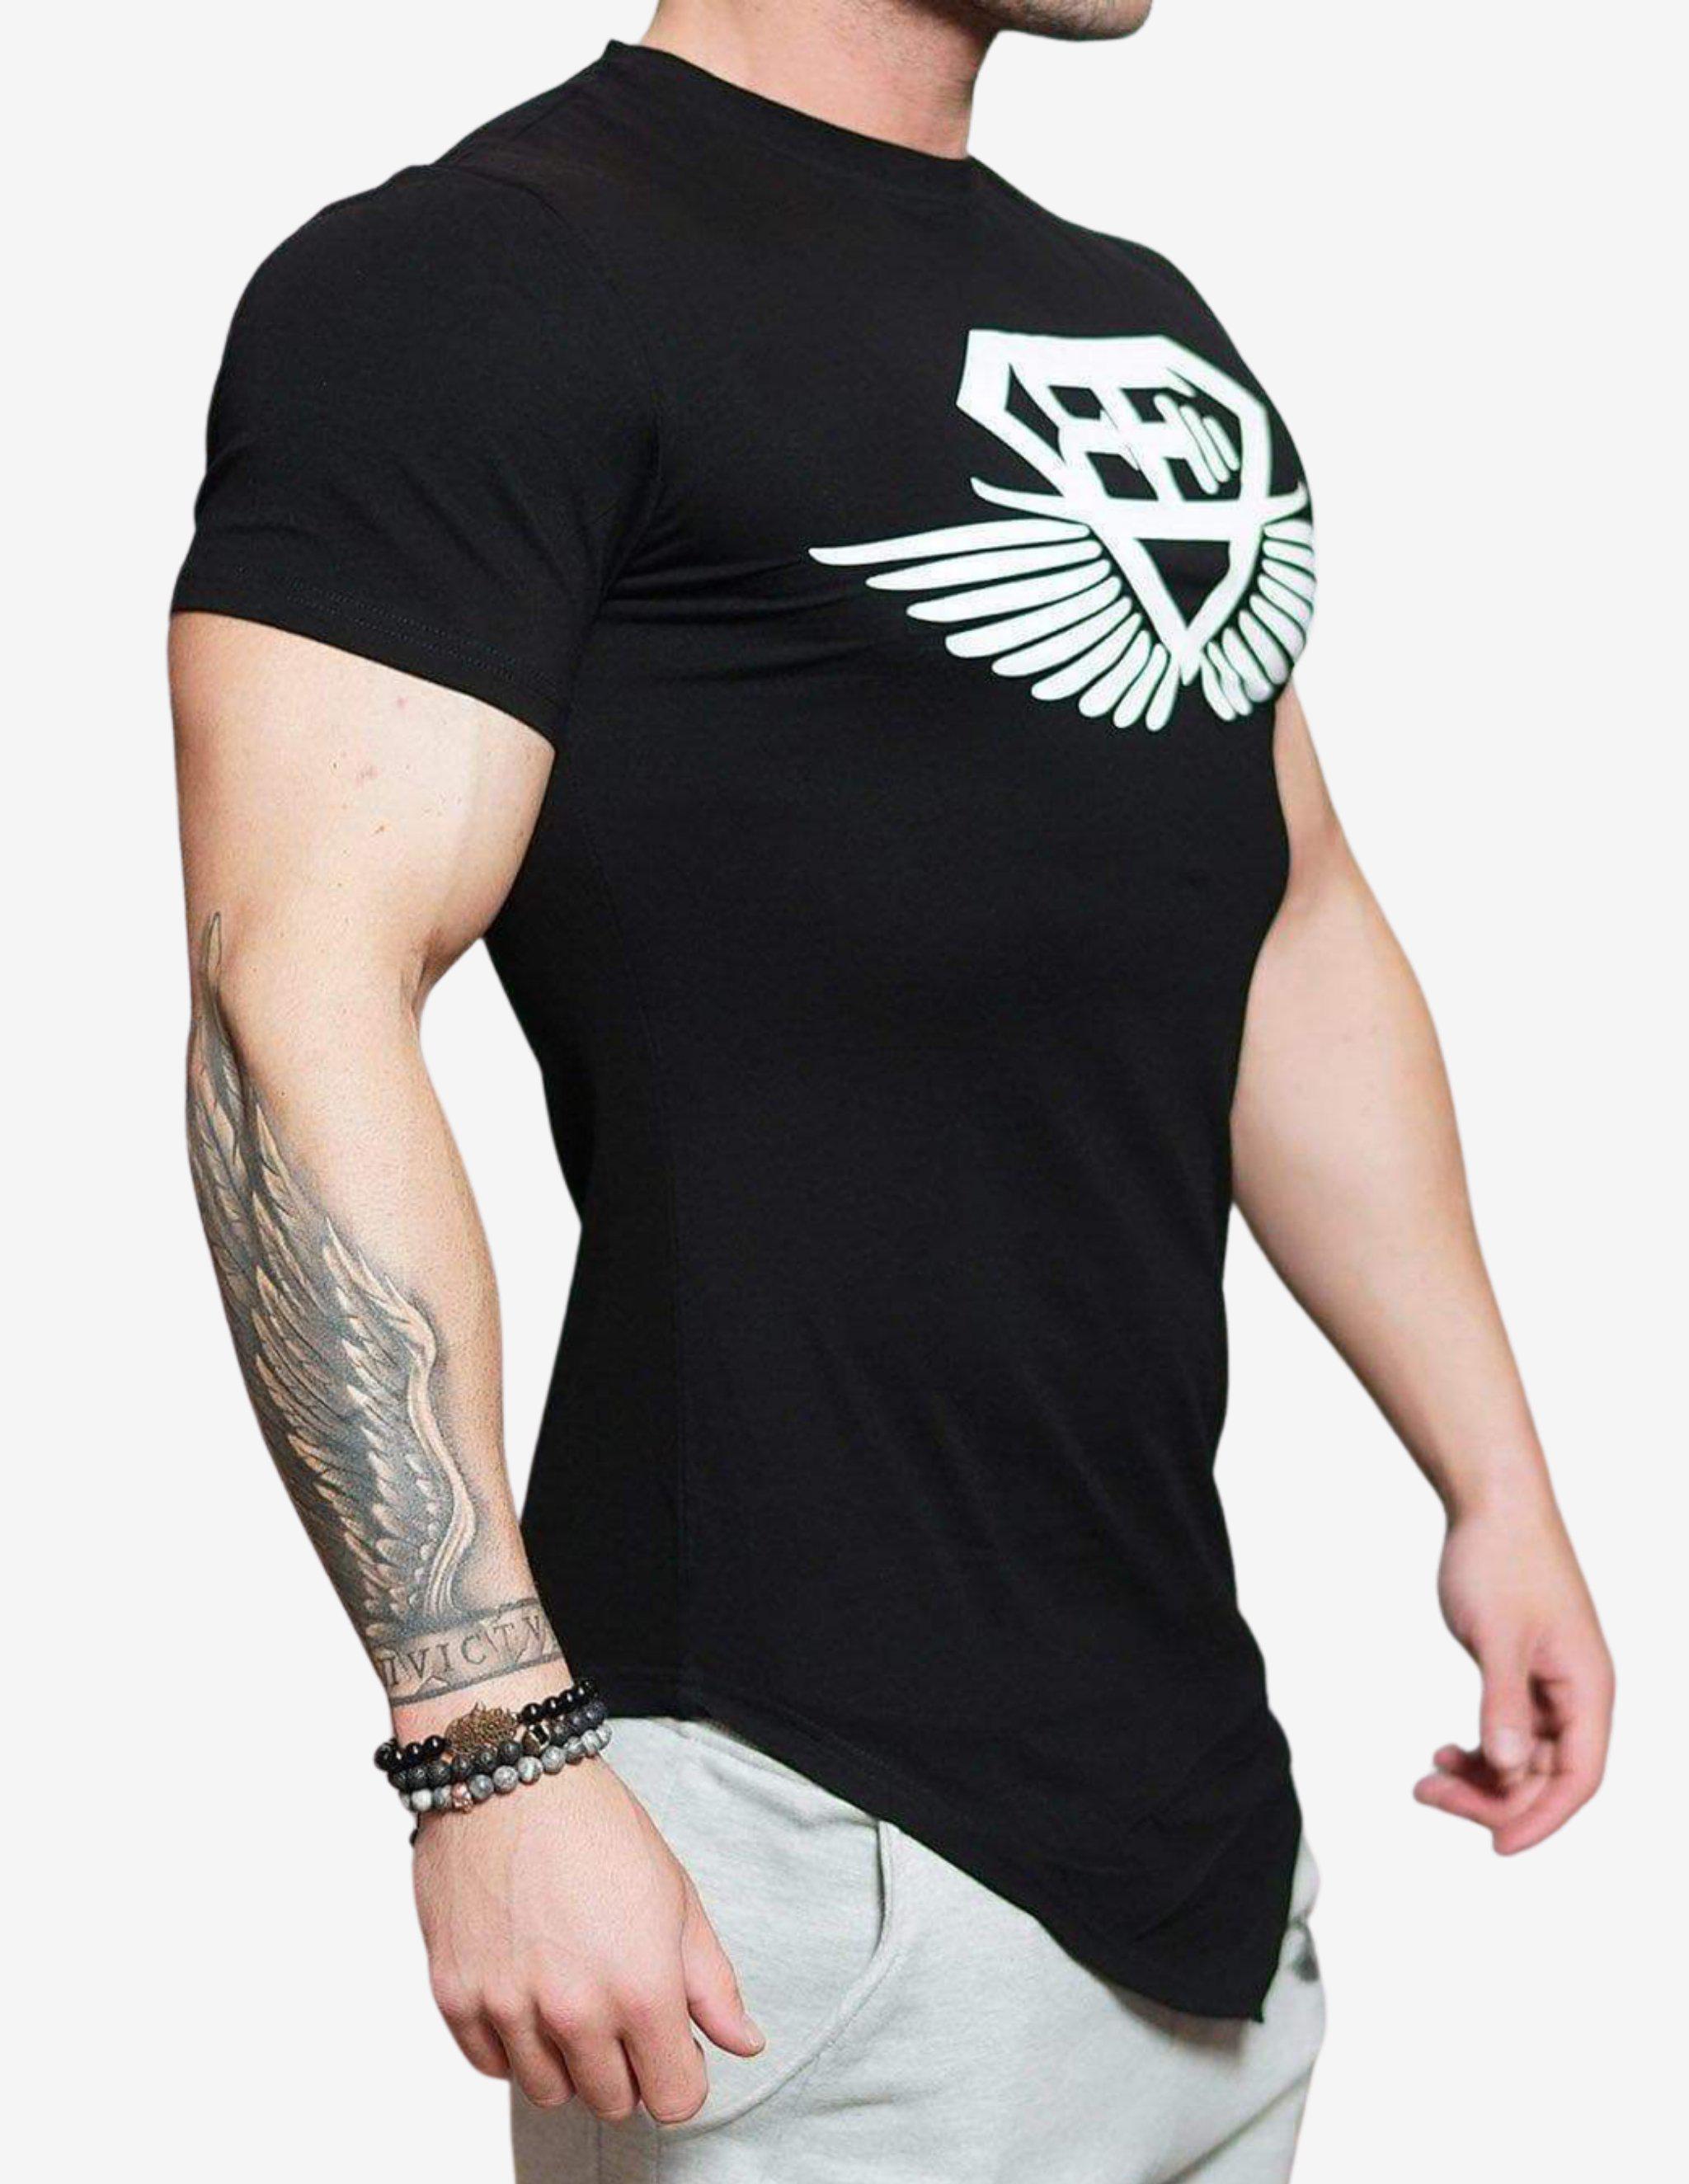 Engineered Life – Black Out-T-shirt Man-Body Engineers-Guru Muscle